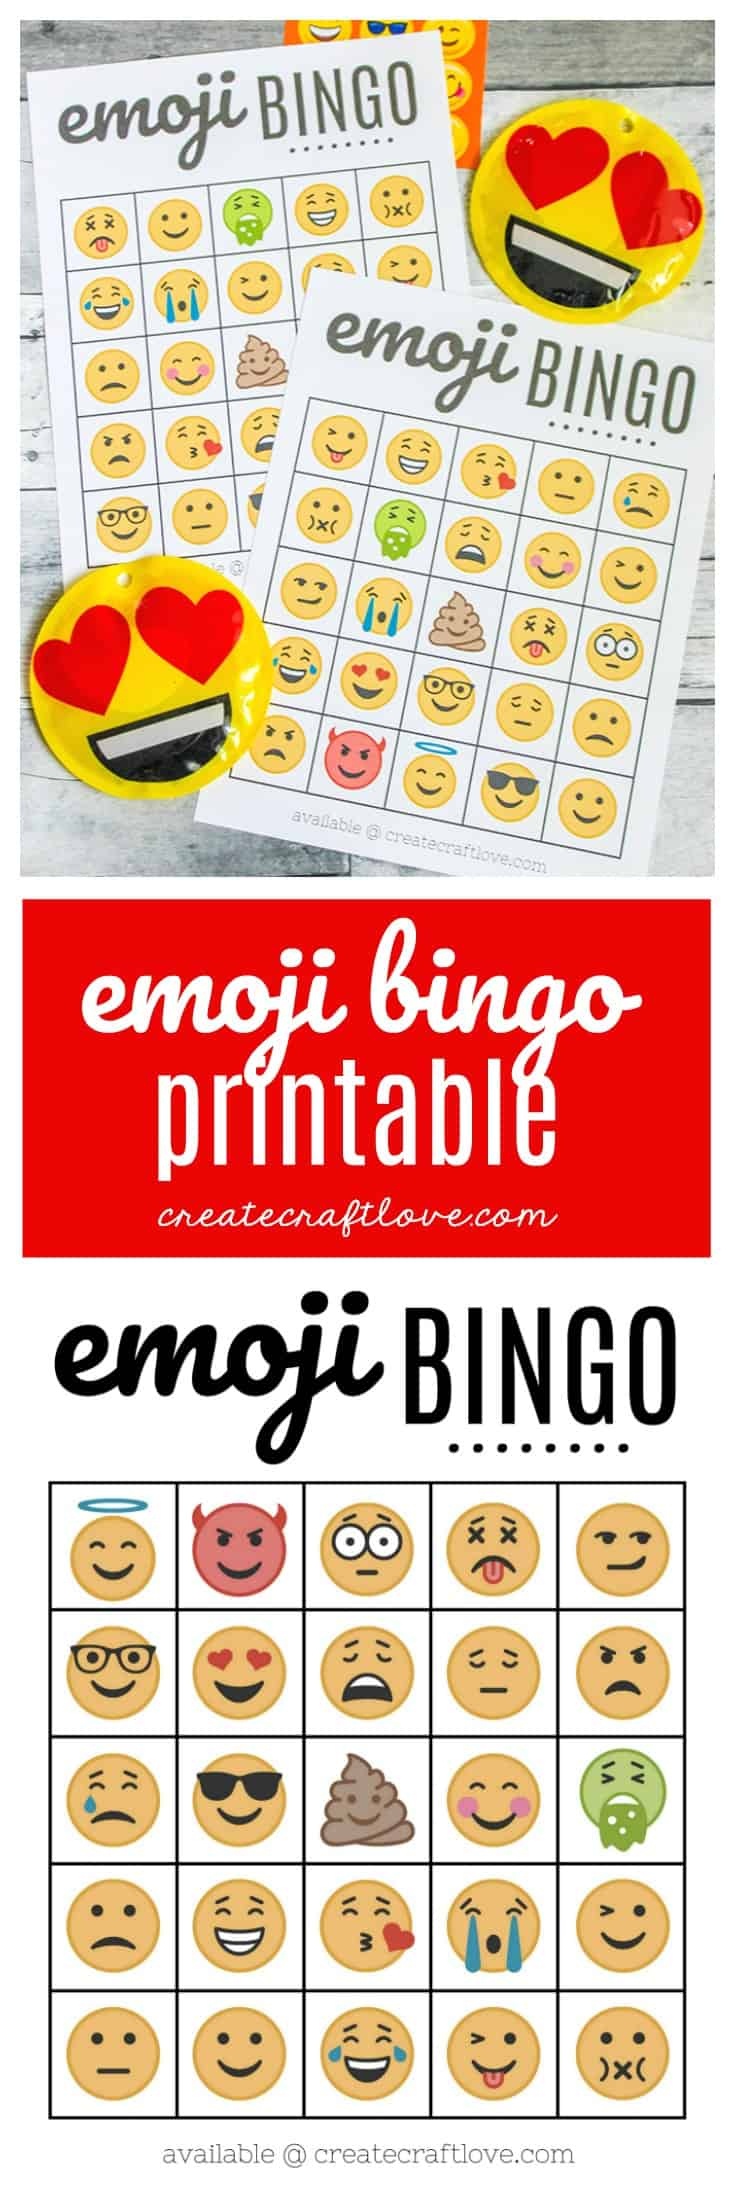 Free Emoji Bingo Printable - Create Craft Love - Free Emoji Bingo Printable